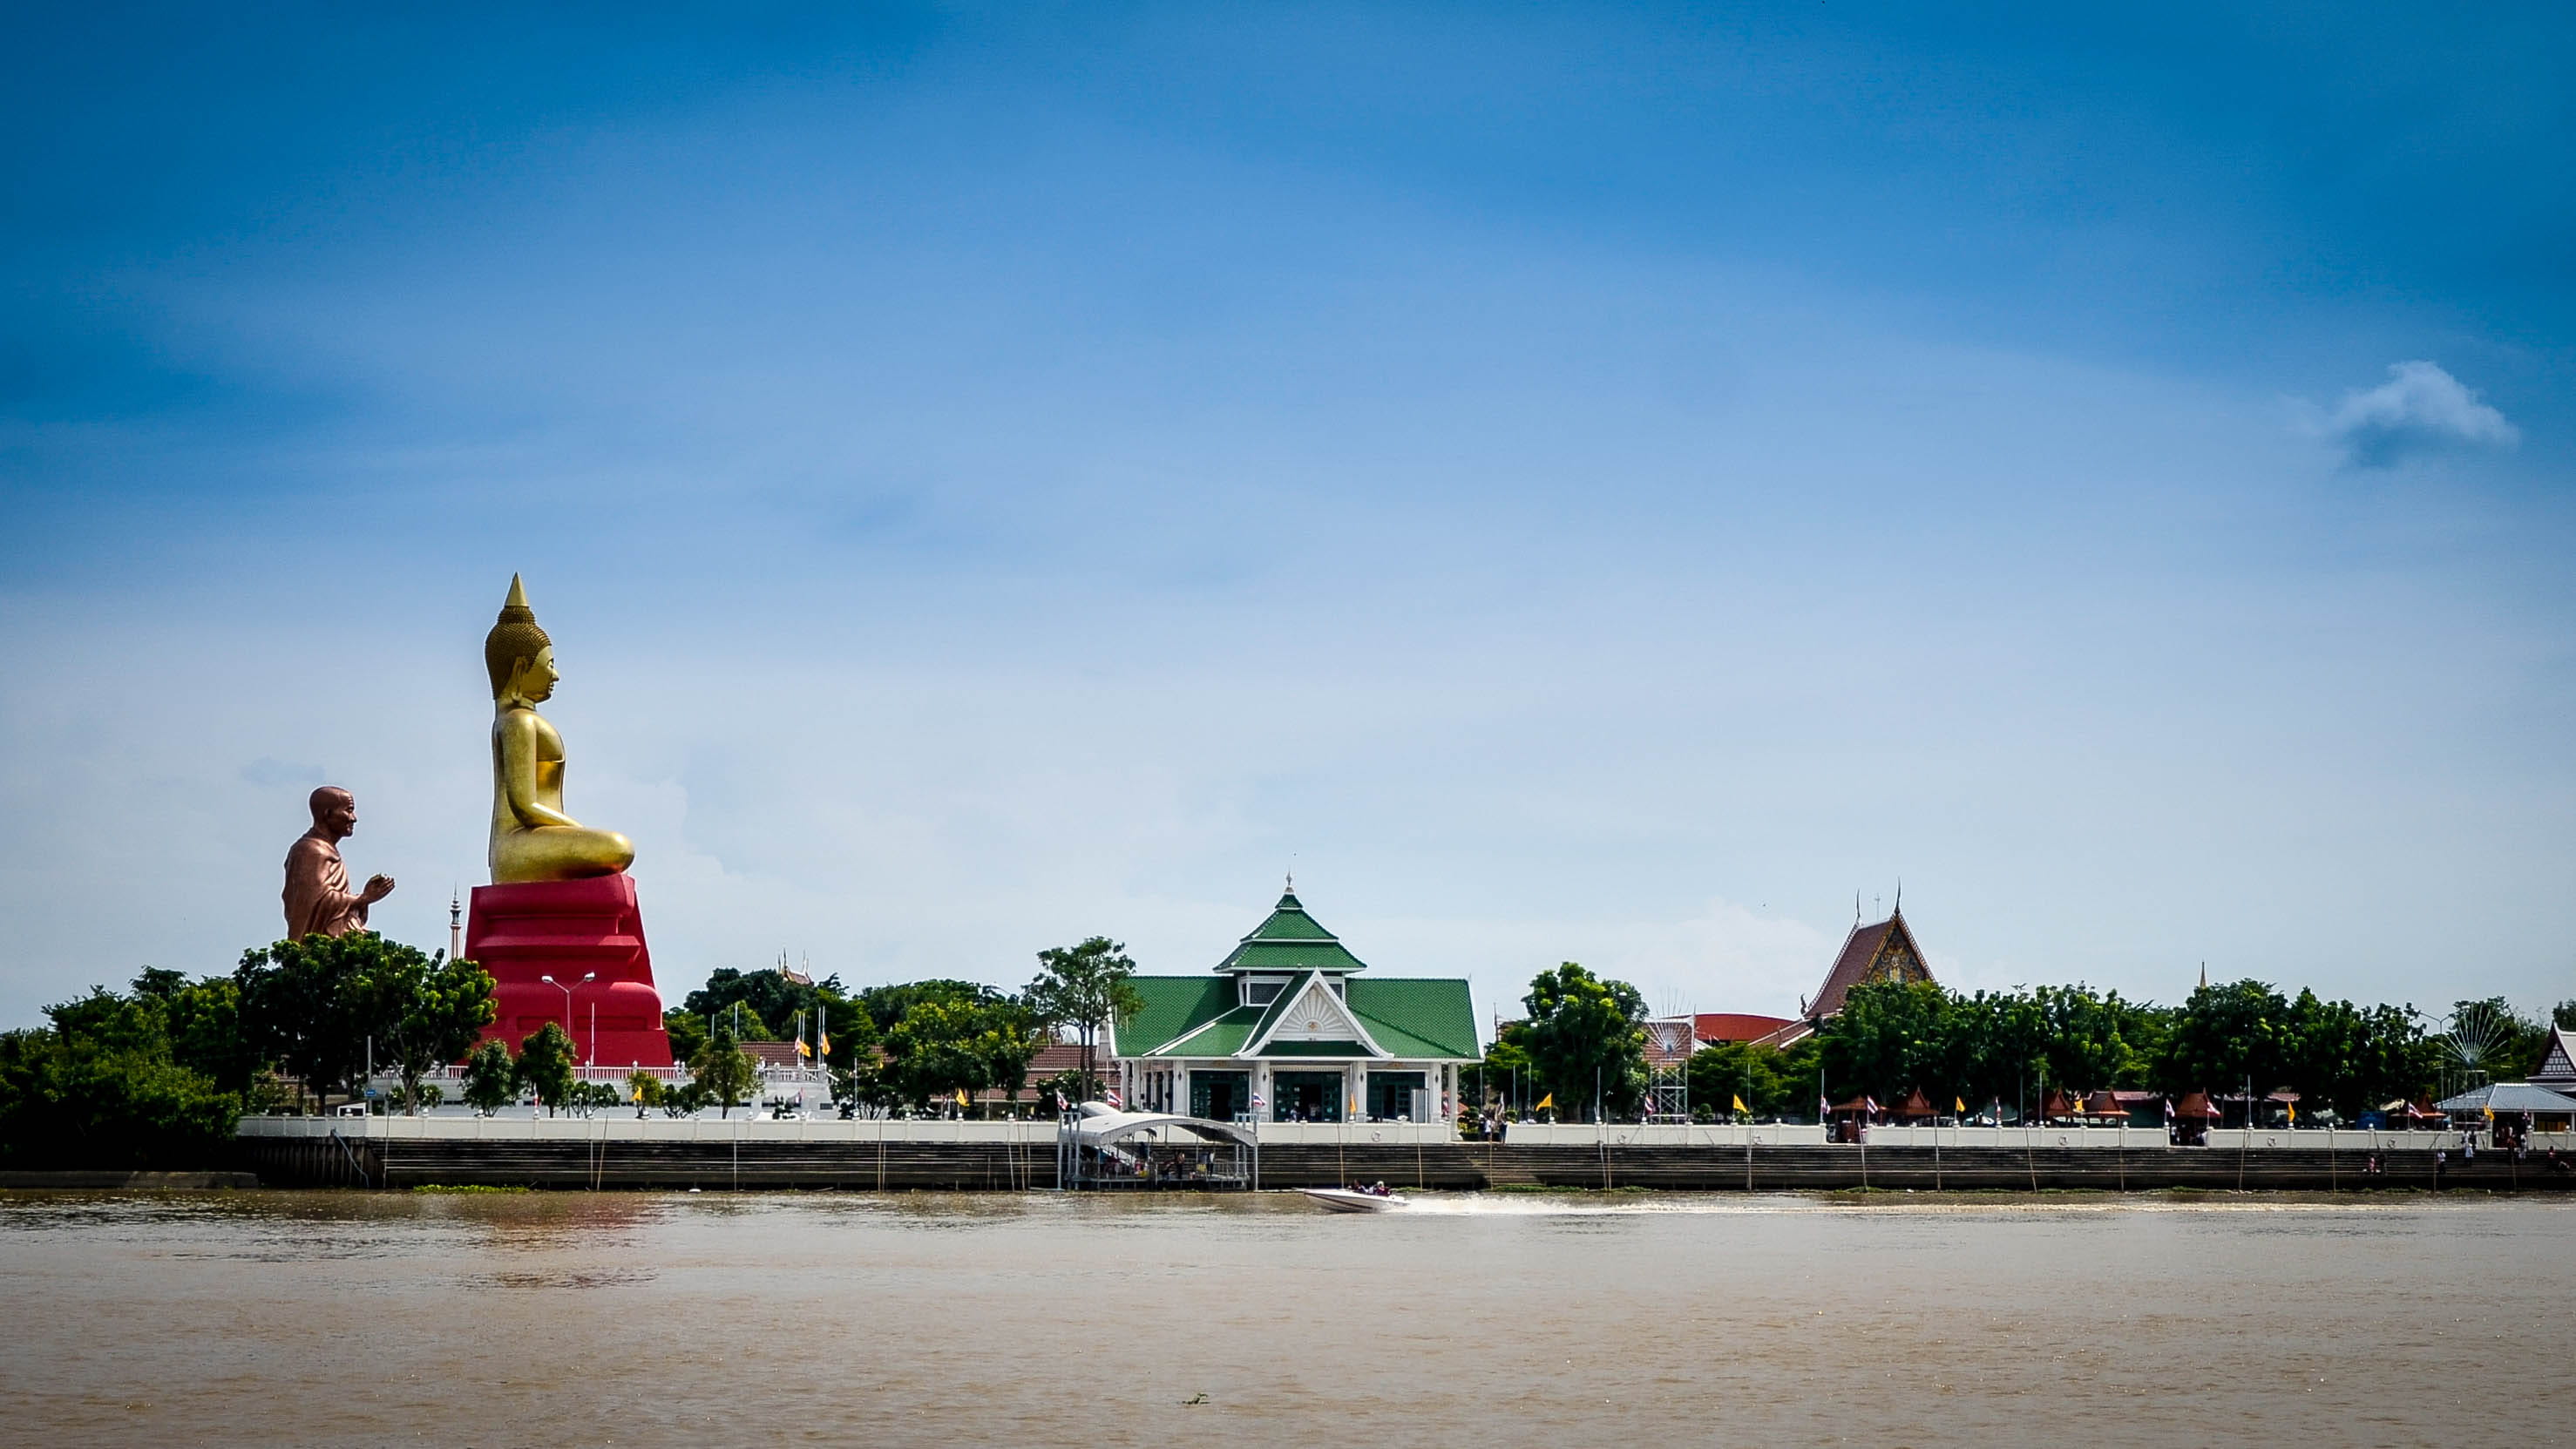 buddha Statue on waterfront, buddhism, religion, asia, asian